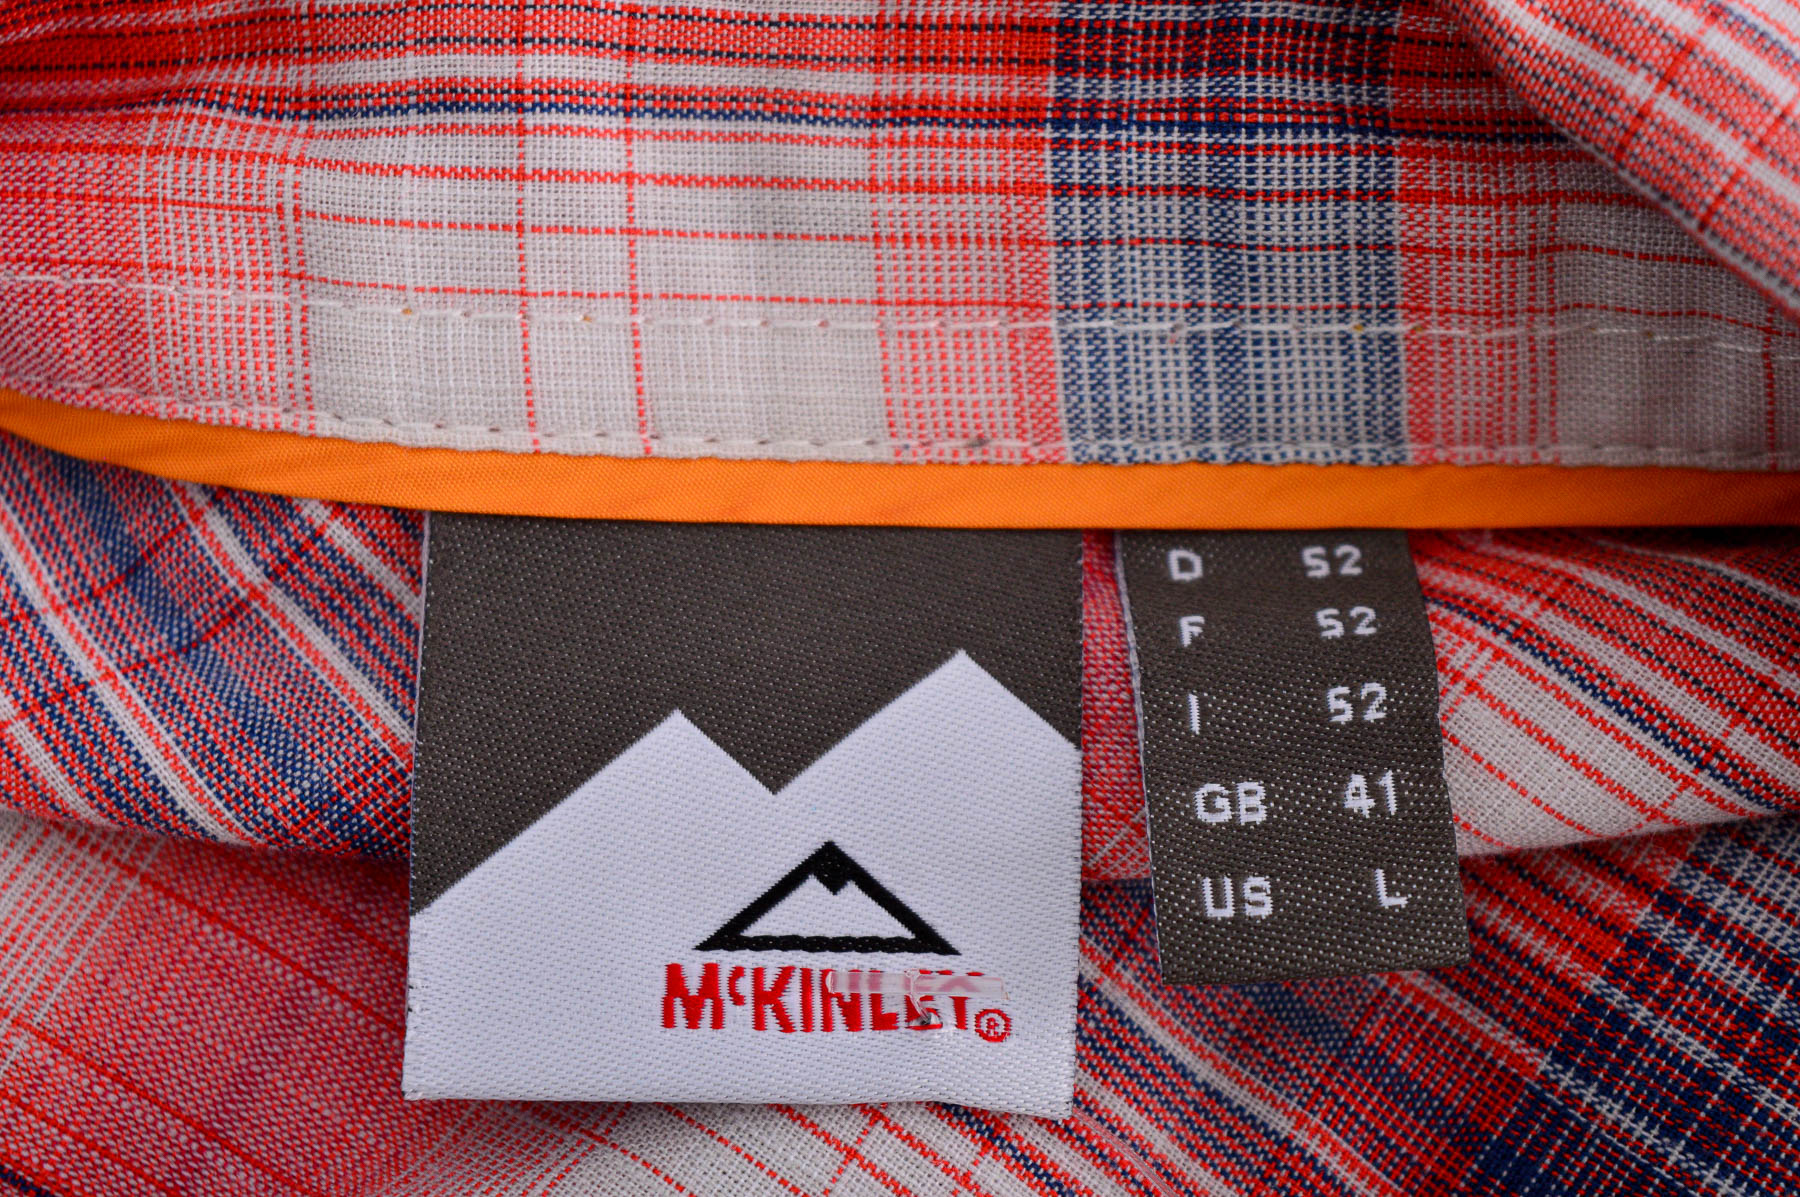 Men's shirt - McKinley - 2